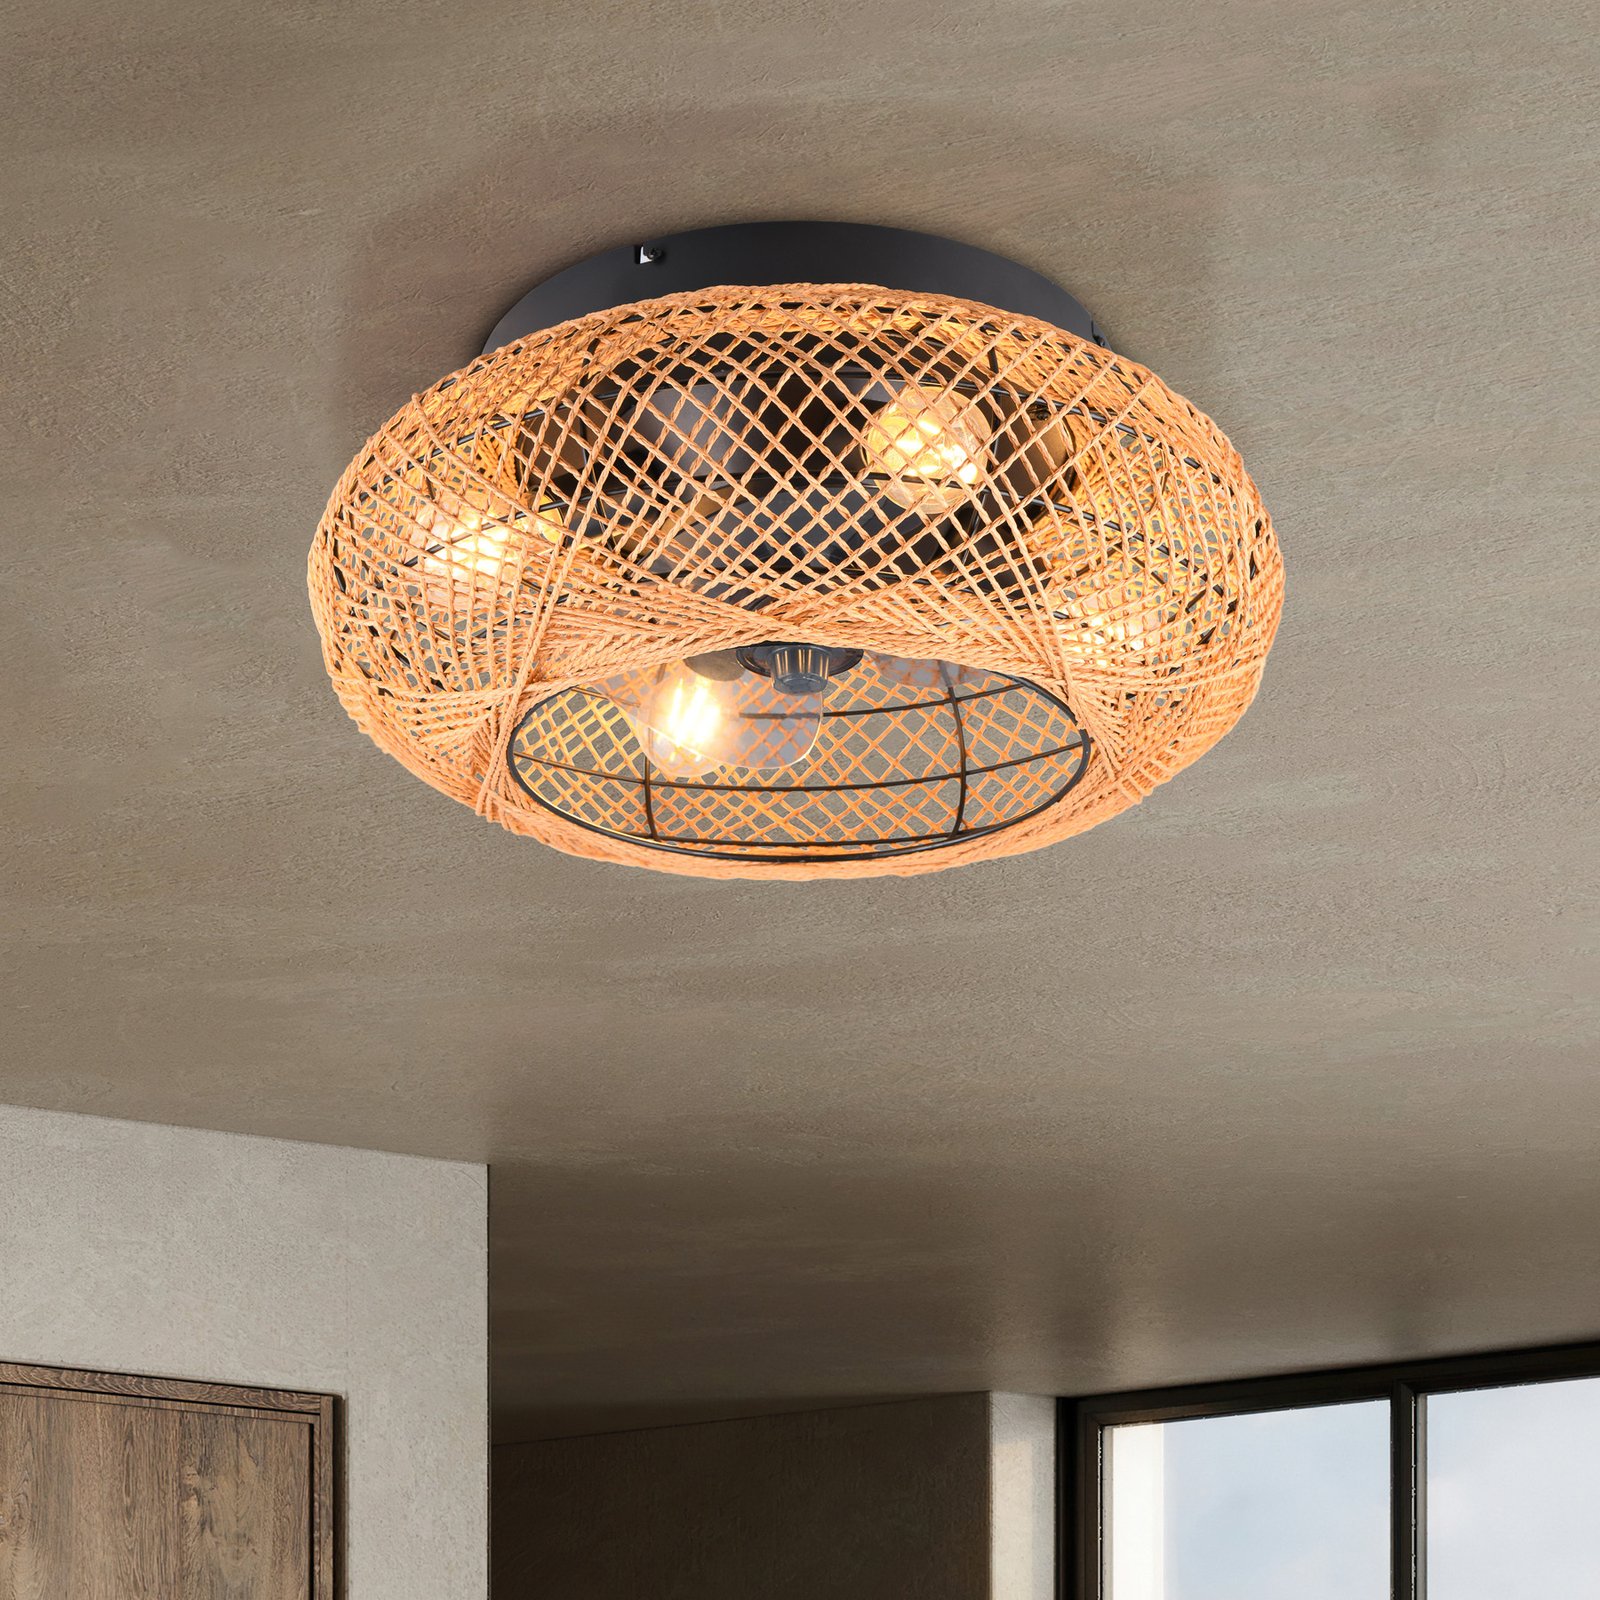 Lillesand ceiling fan with light, quiet, Ø 50 cm, remote control